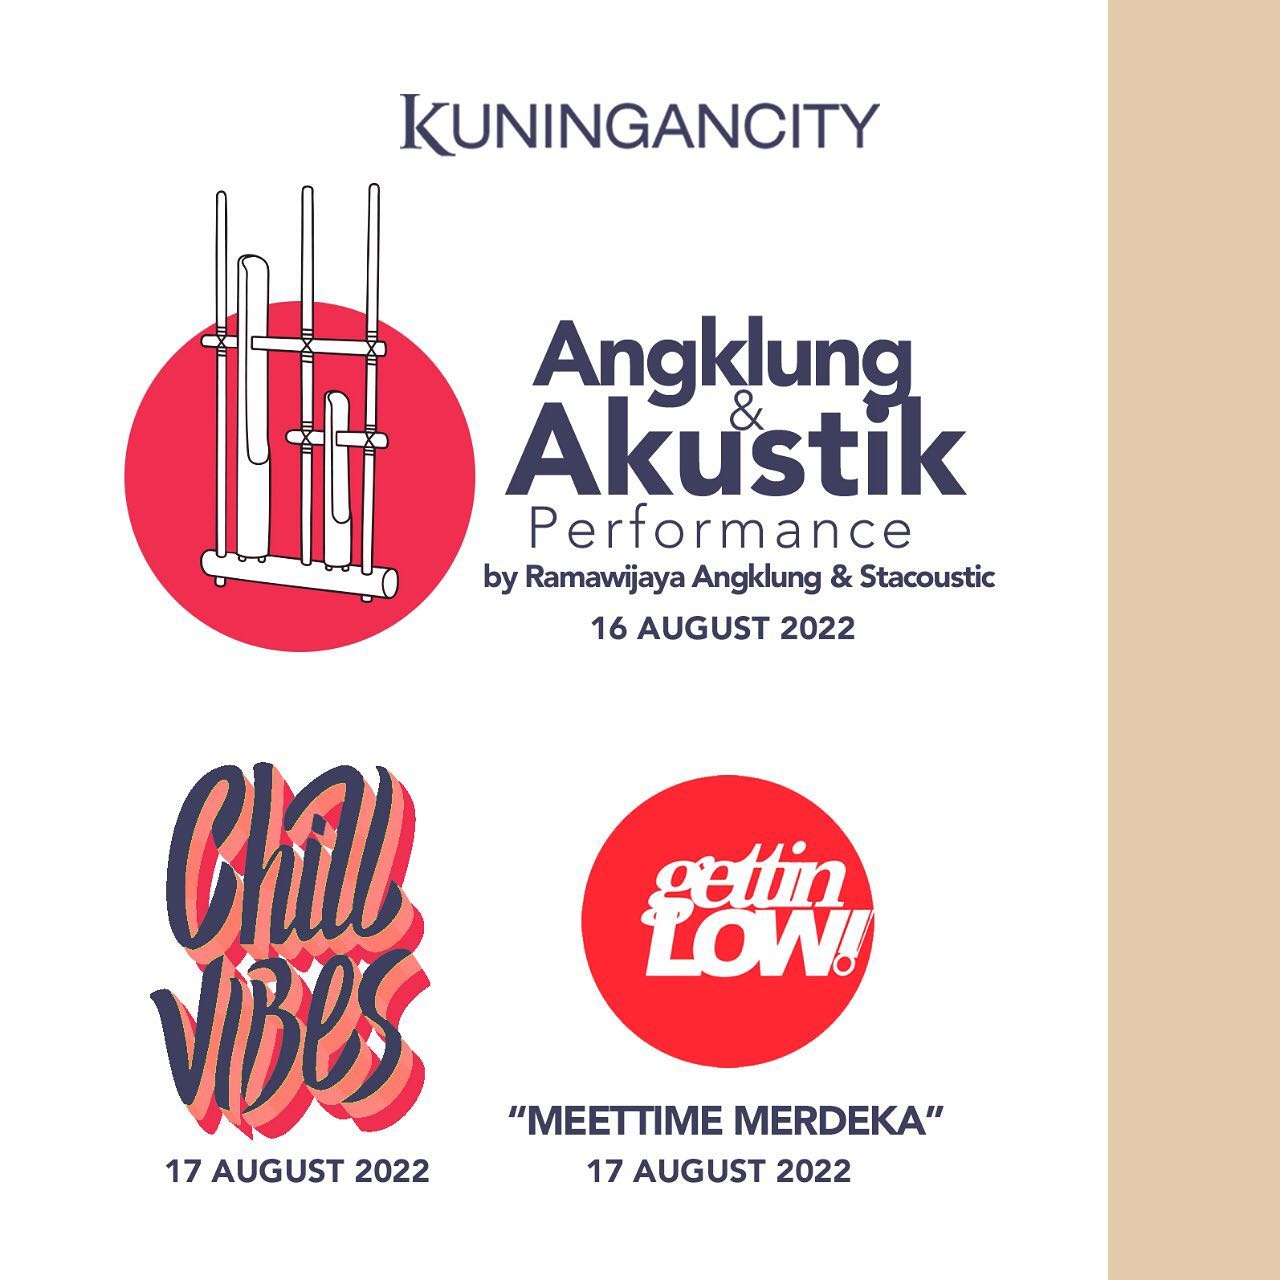 Kuningan City Program, Promo, and Events